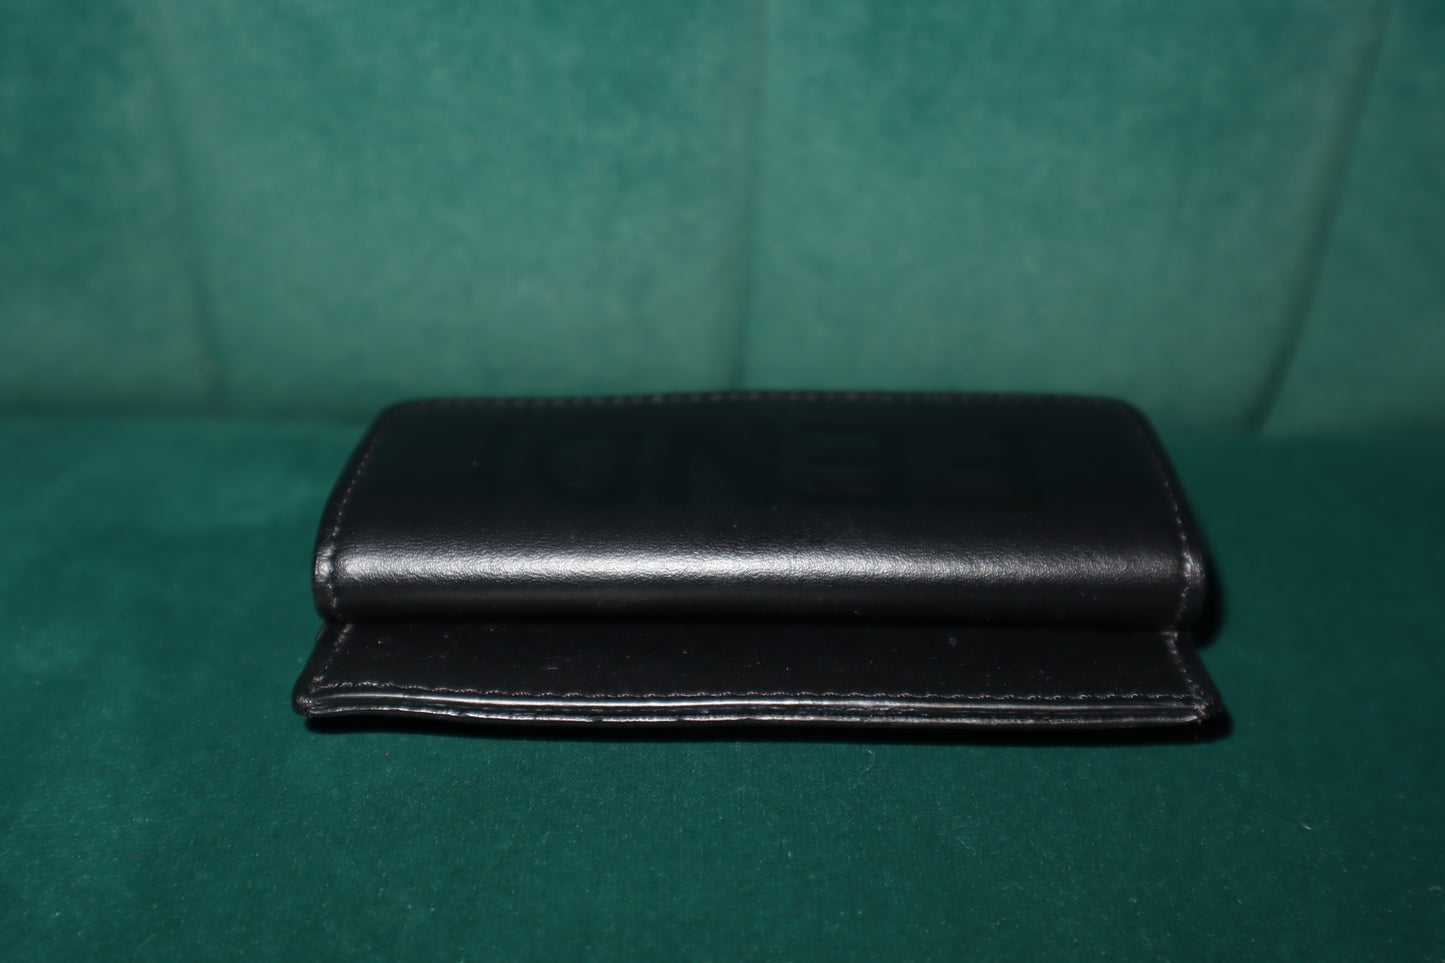 Fendi Embossed Logo Leather Card Case in Black